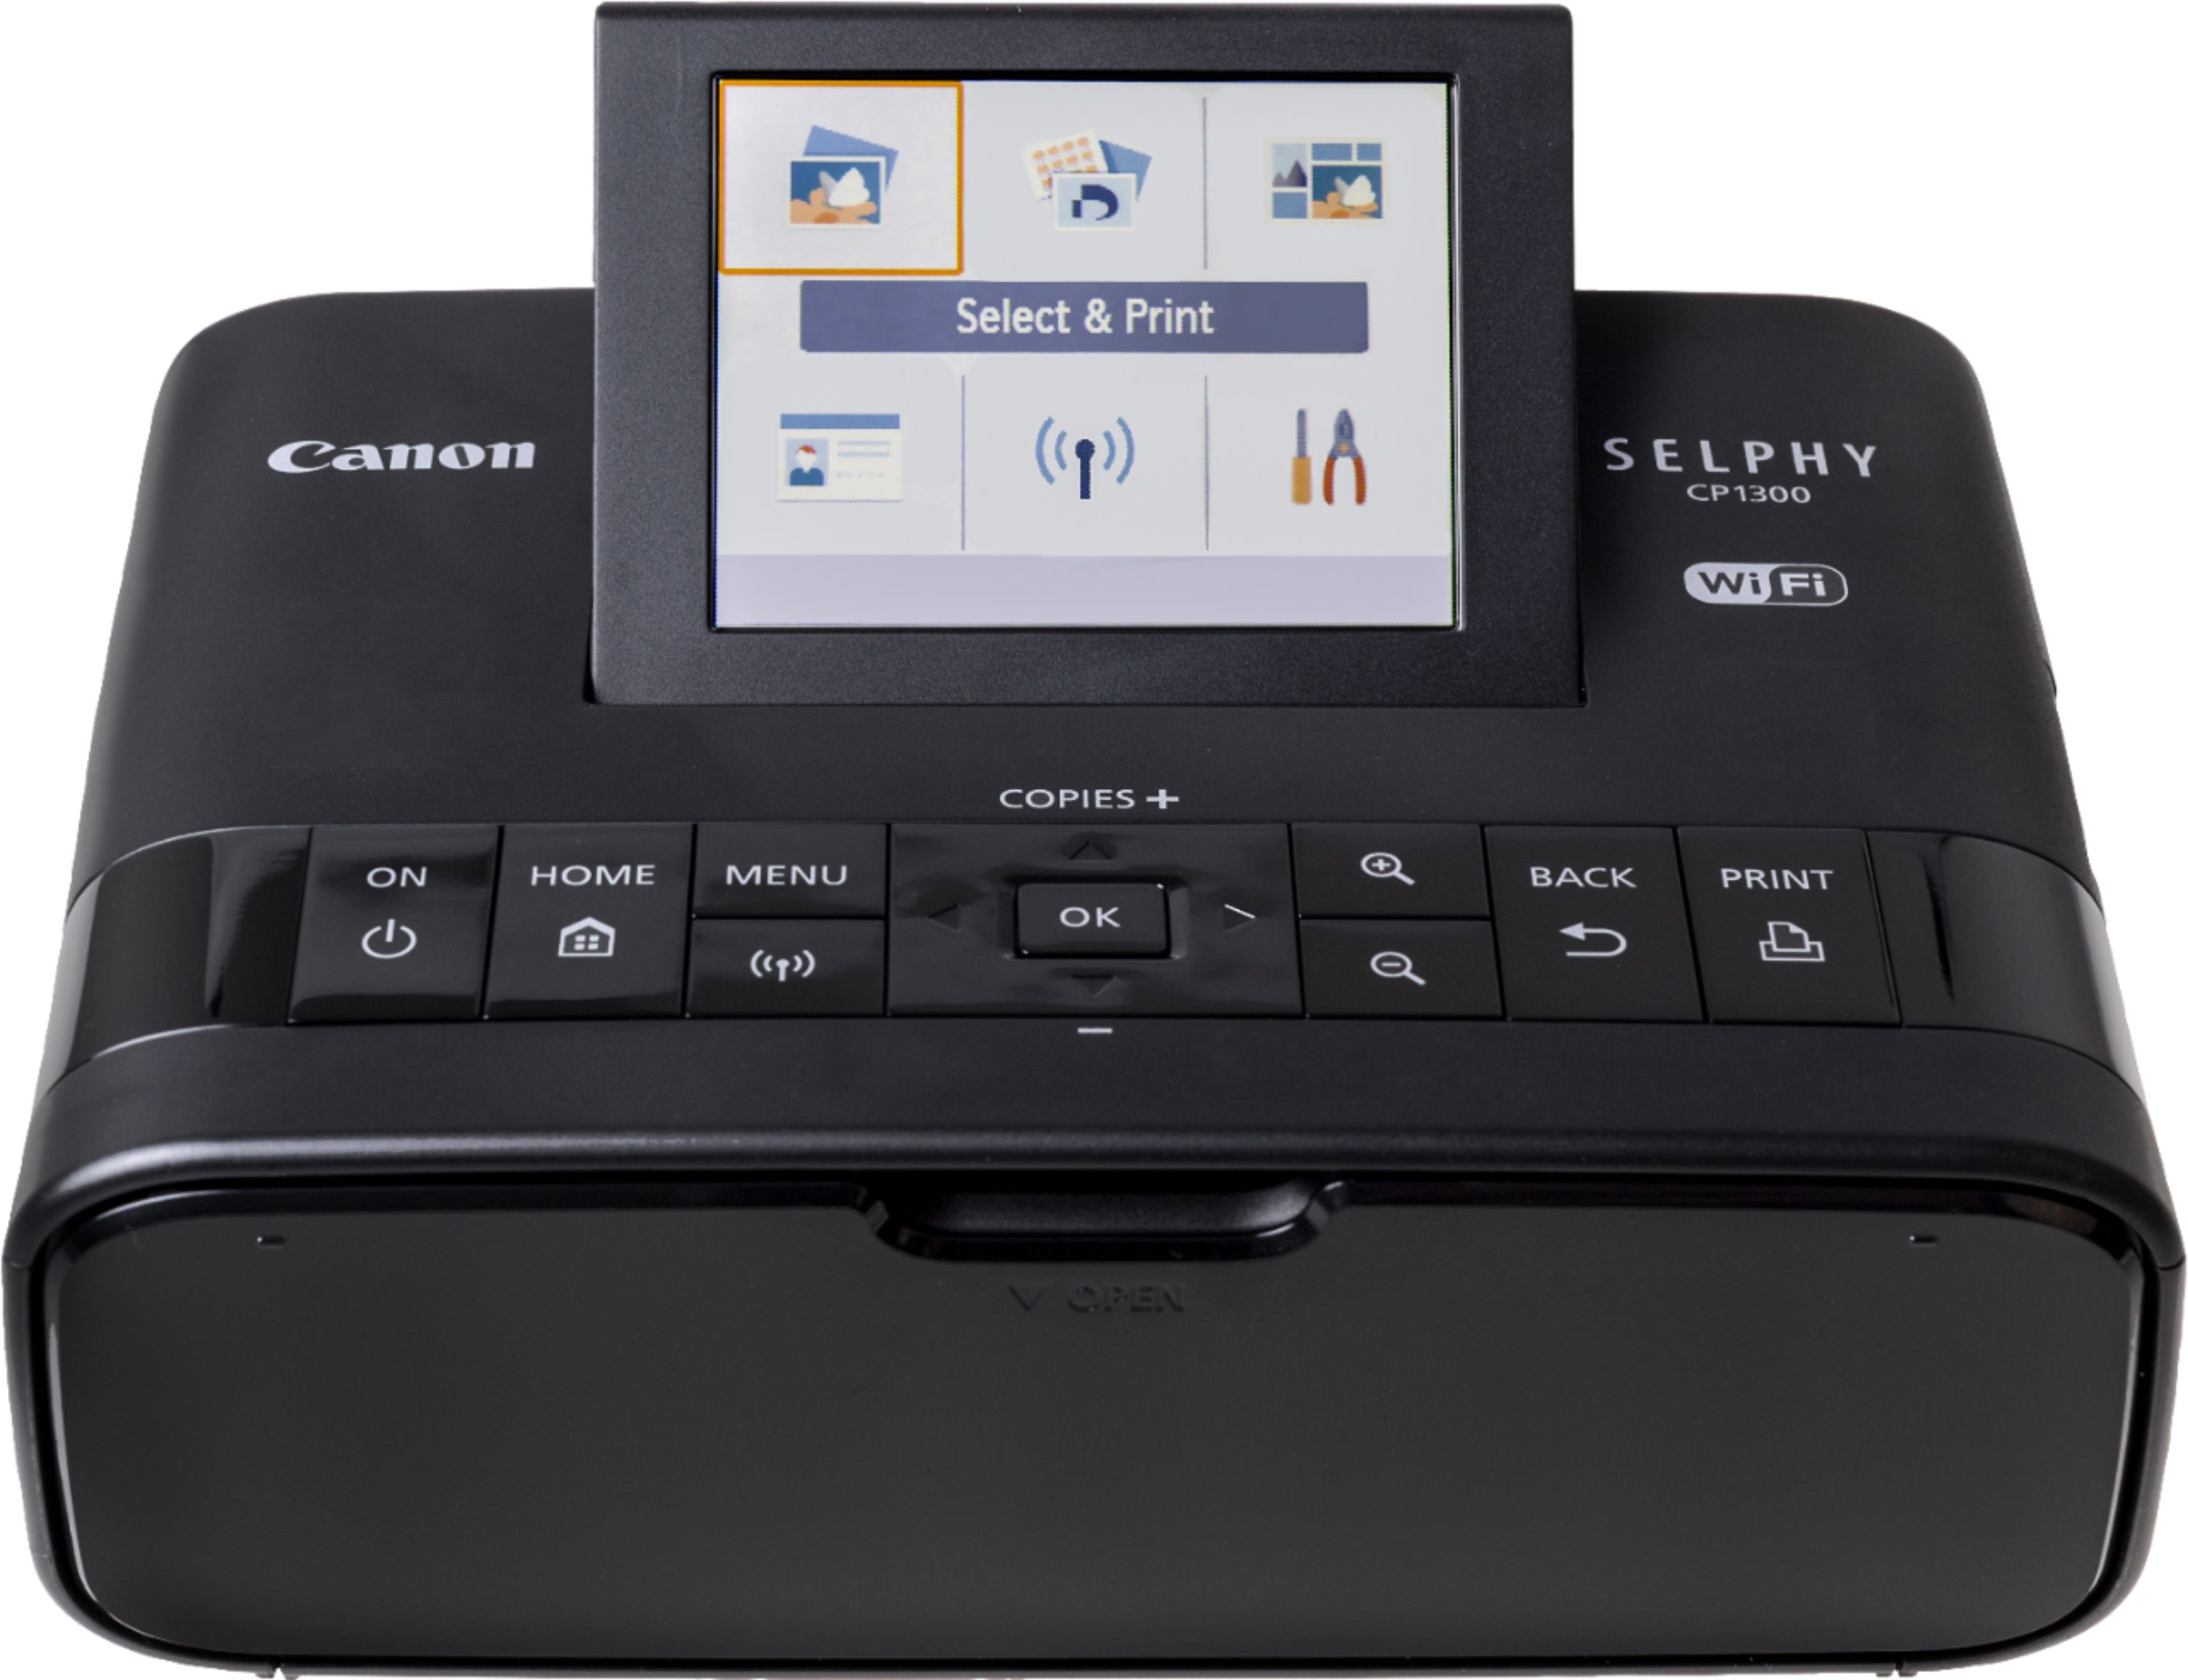 Canon CP1300 Wireless Photo Printer Black 2234C001 - Best Buy